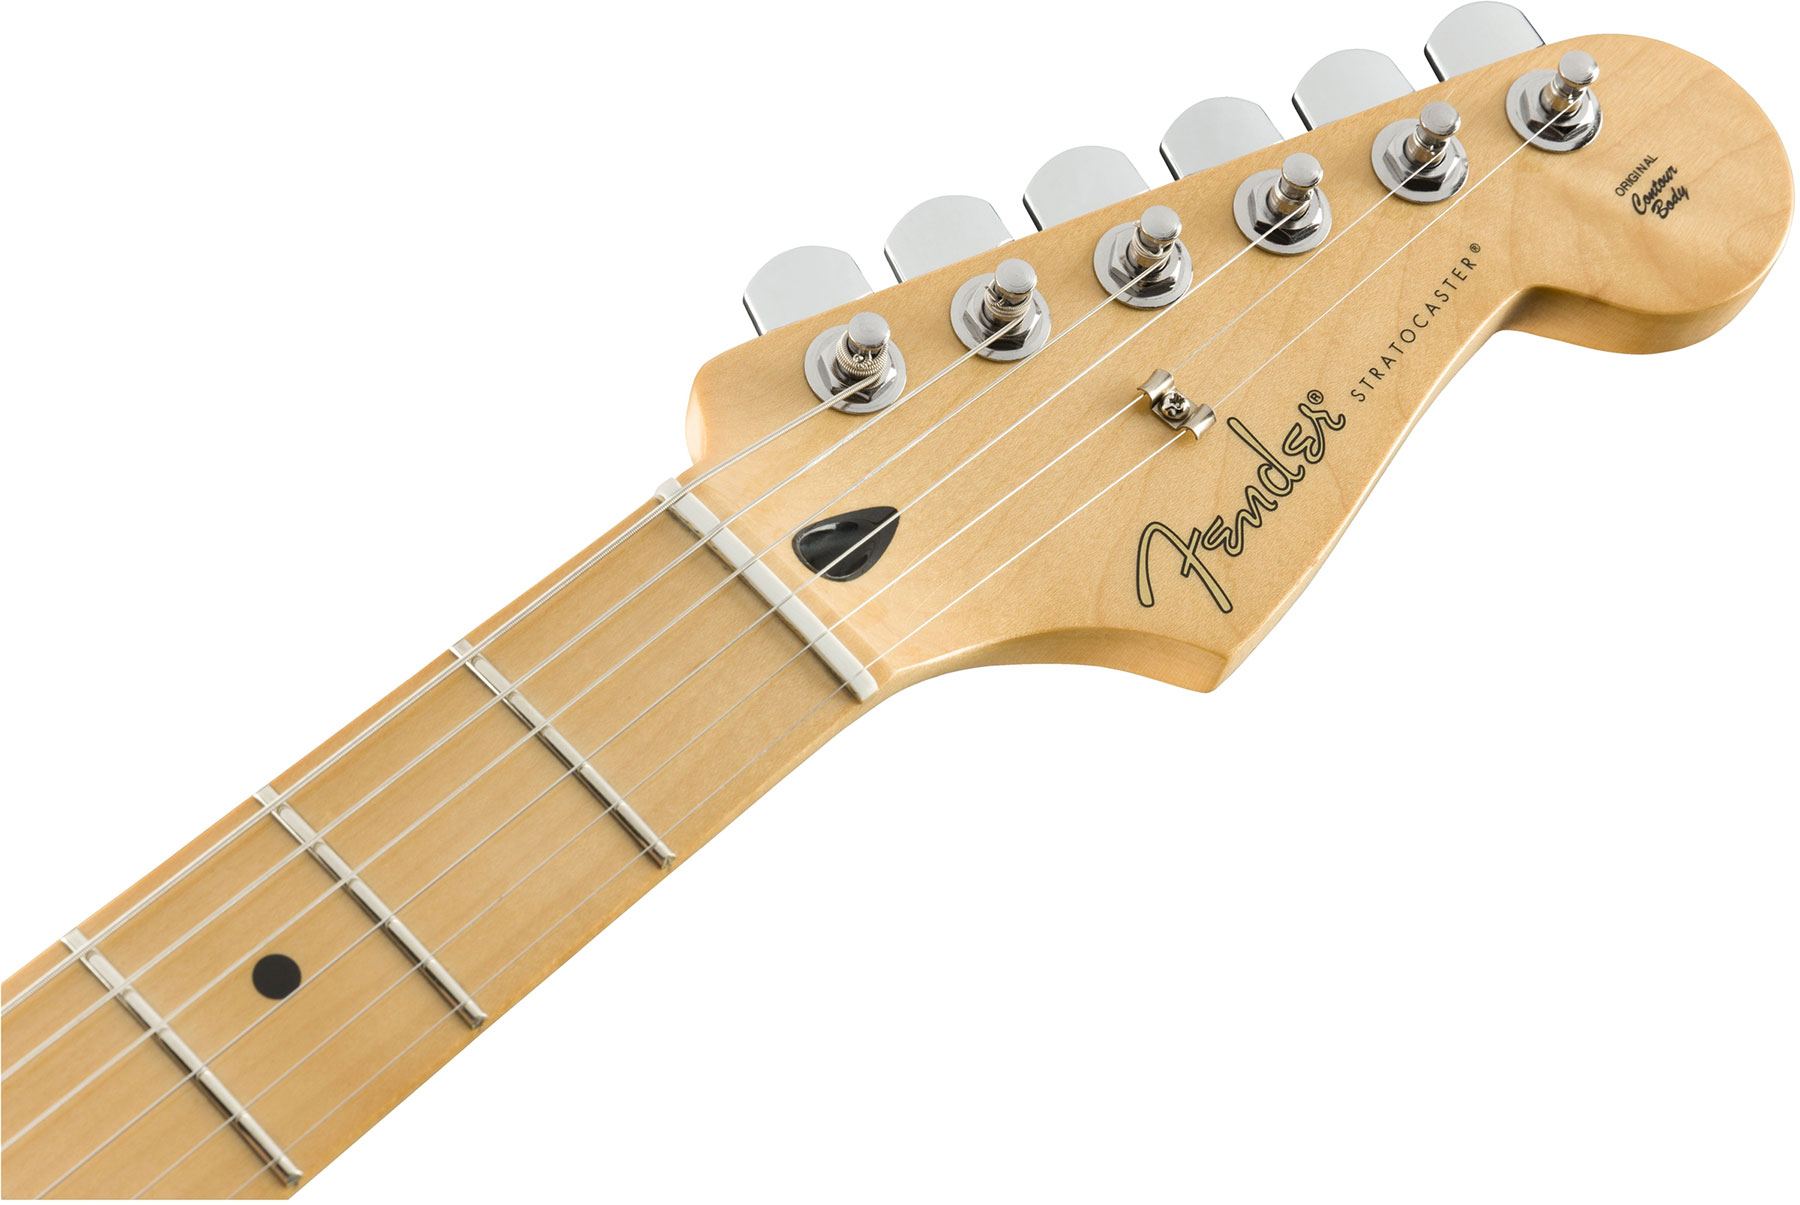 Fender Strat Player Hss Plus Top Fsr Ltd 2019 Mex Mn - Sienna Sunburst - E-Gitarre in Str-Form - Variation 1